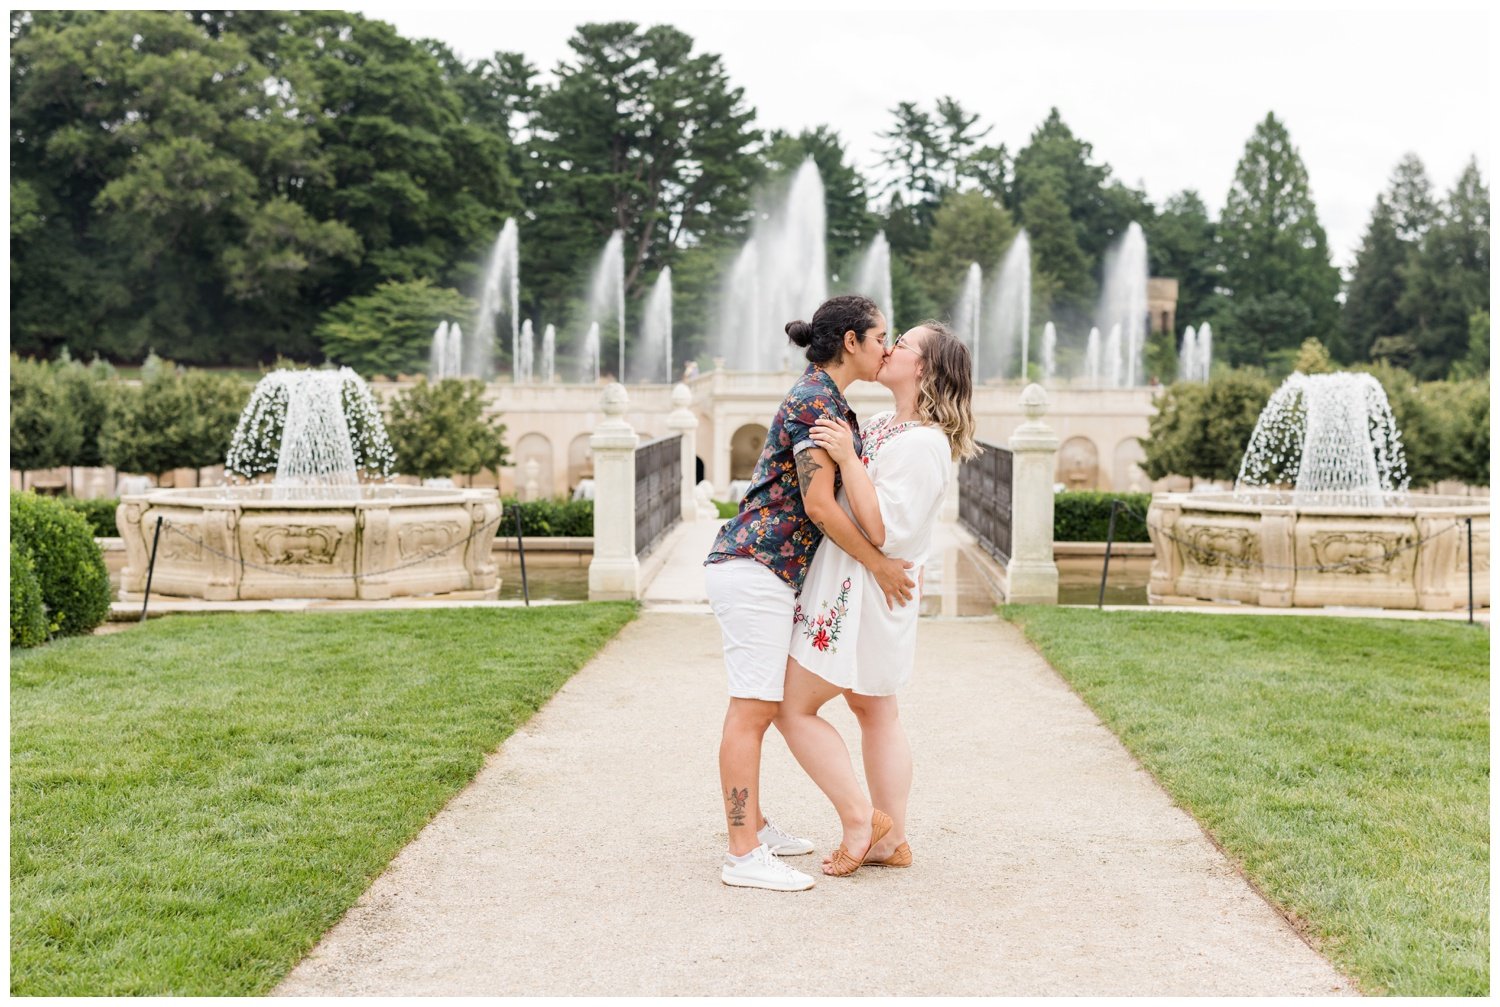 Lesbian-engagement-session-at-Longwood-Gardens-near-Philadelphia-PA-10.jpg